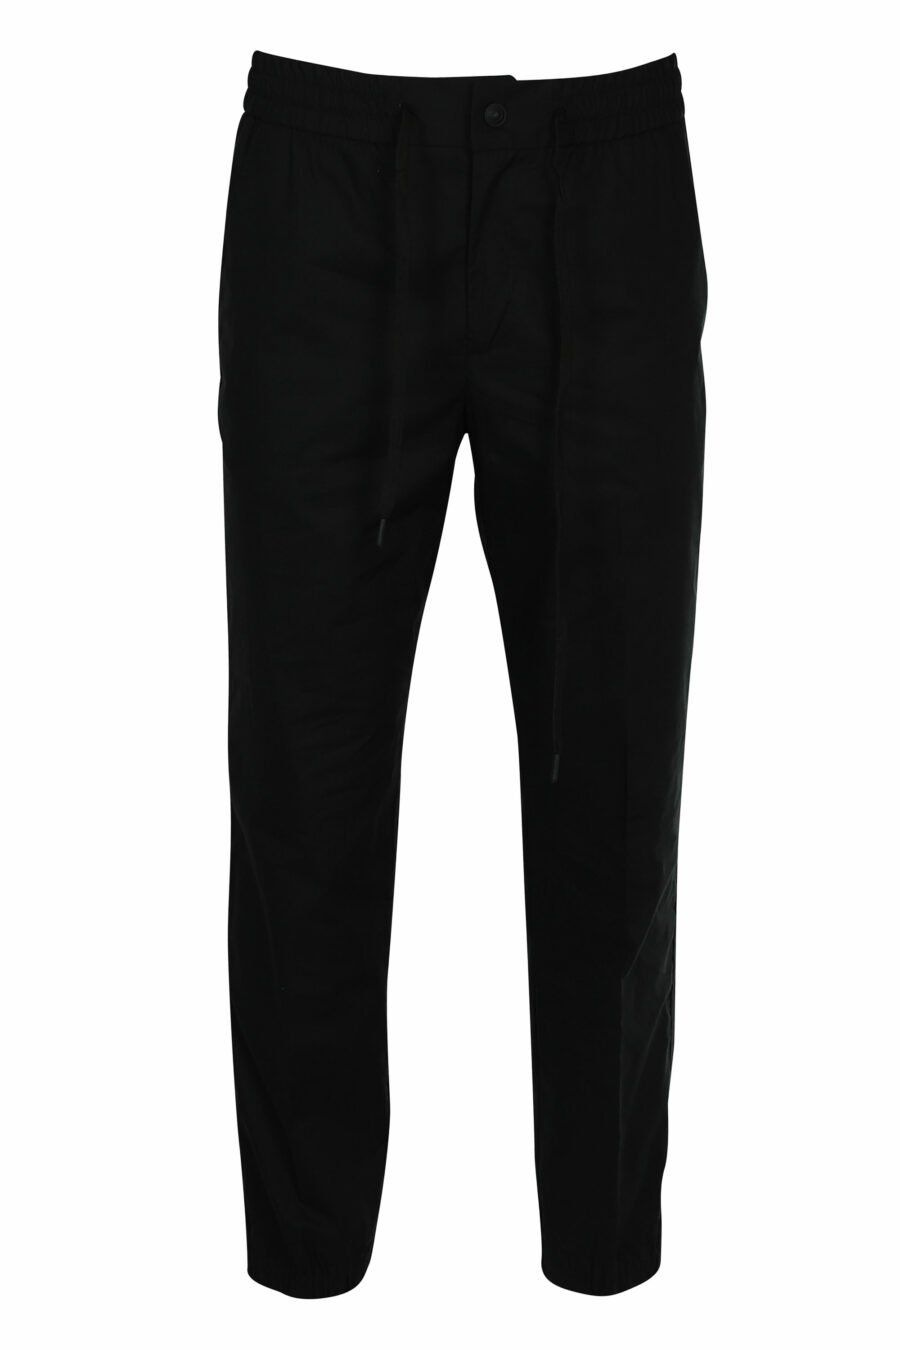 Black logo fishing trousers - 8052019219876